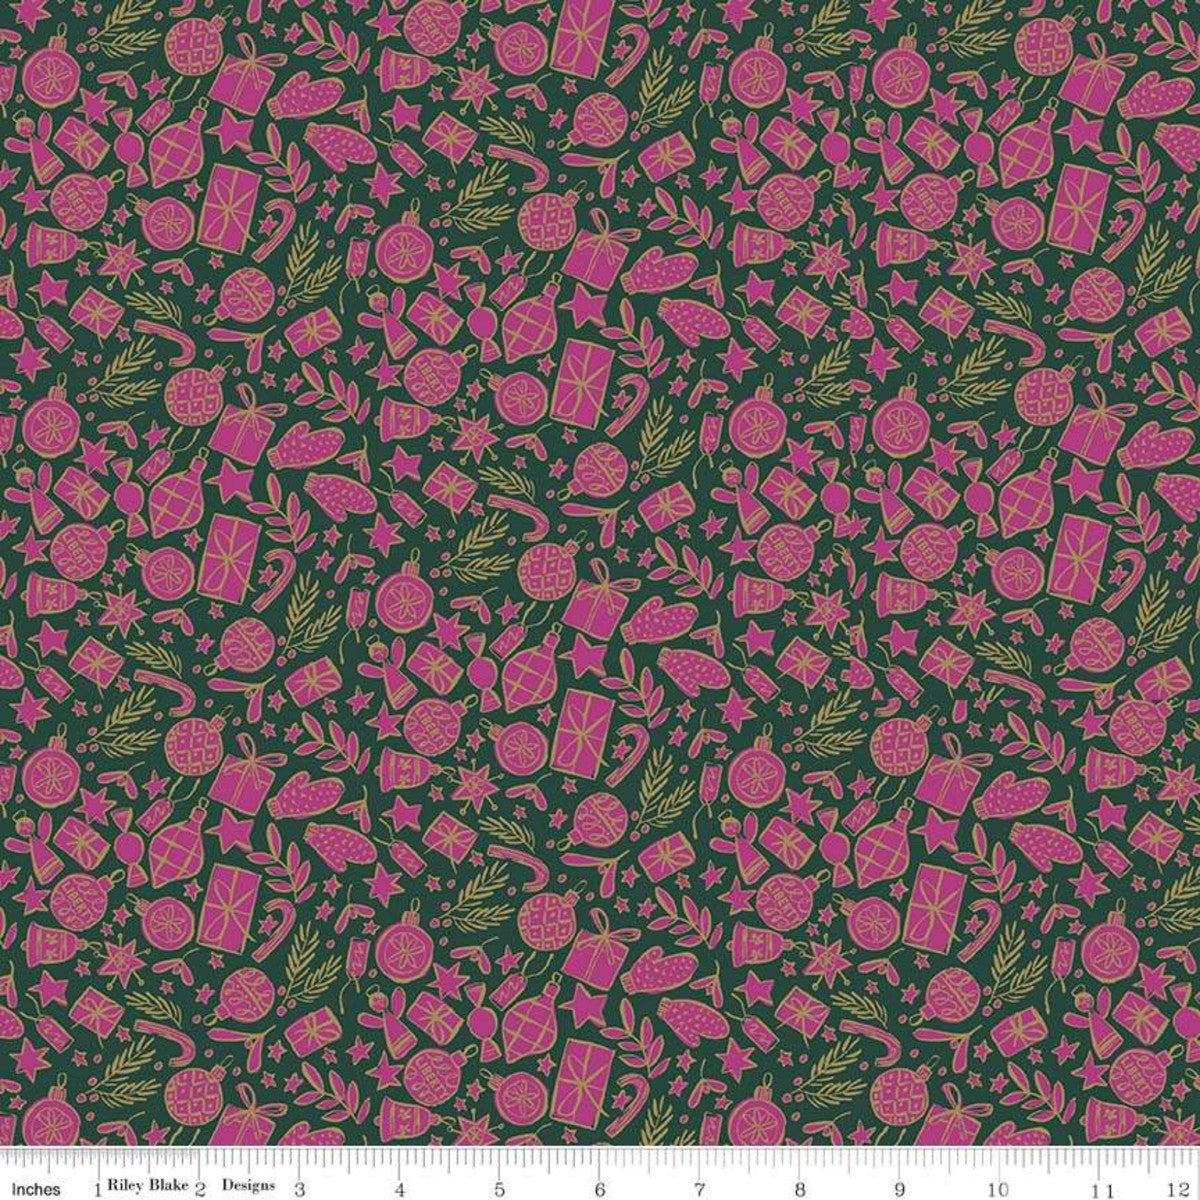 Festive Christmas Cheer Pink - Season's Greetings Collection  - Liberty Cotton Fabric ✂️ £10 pm *SALE*